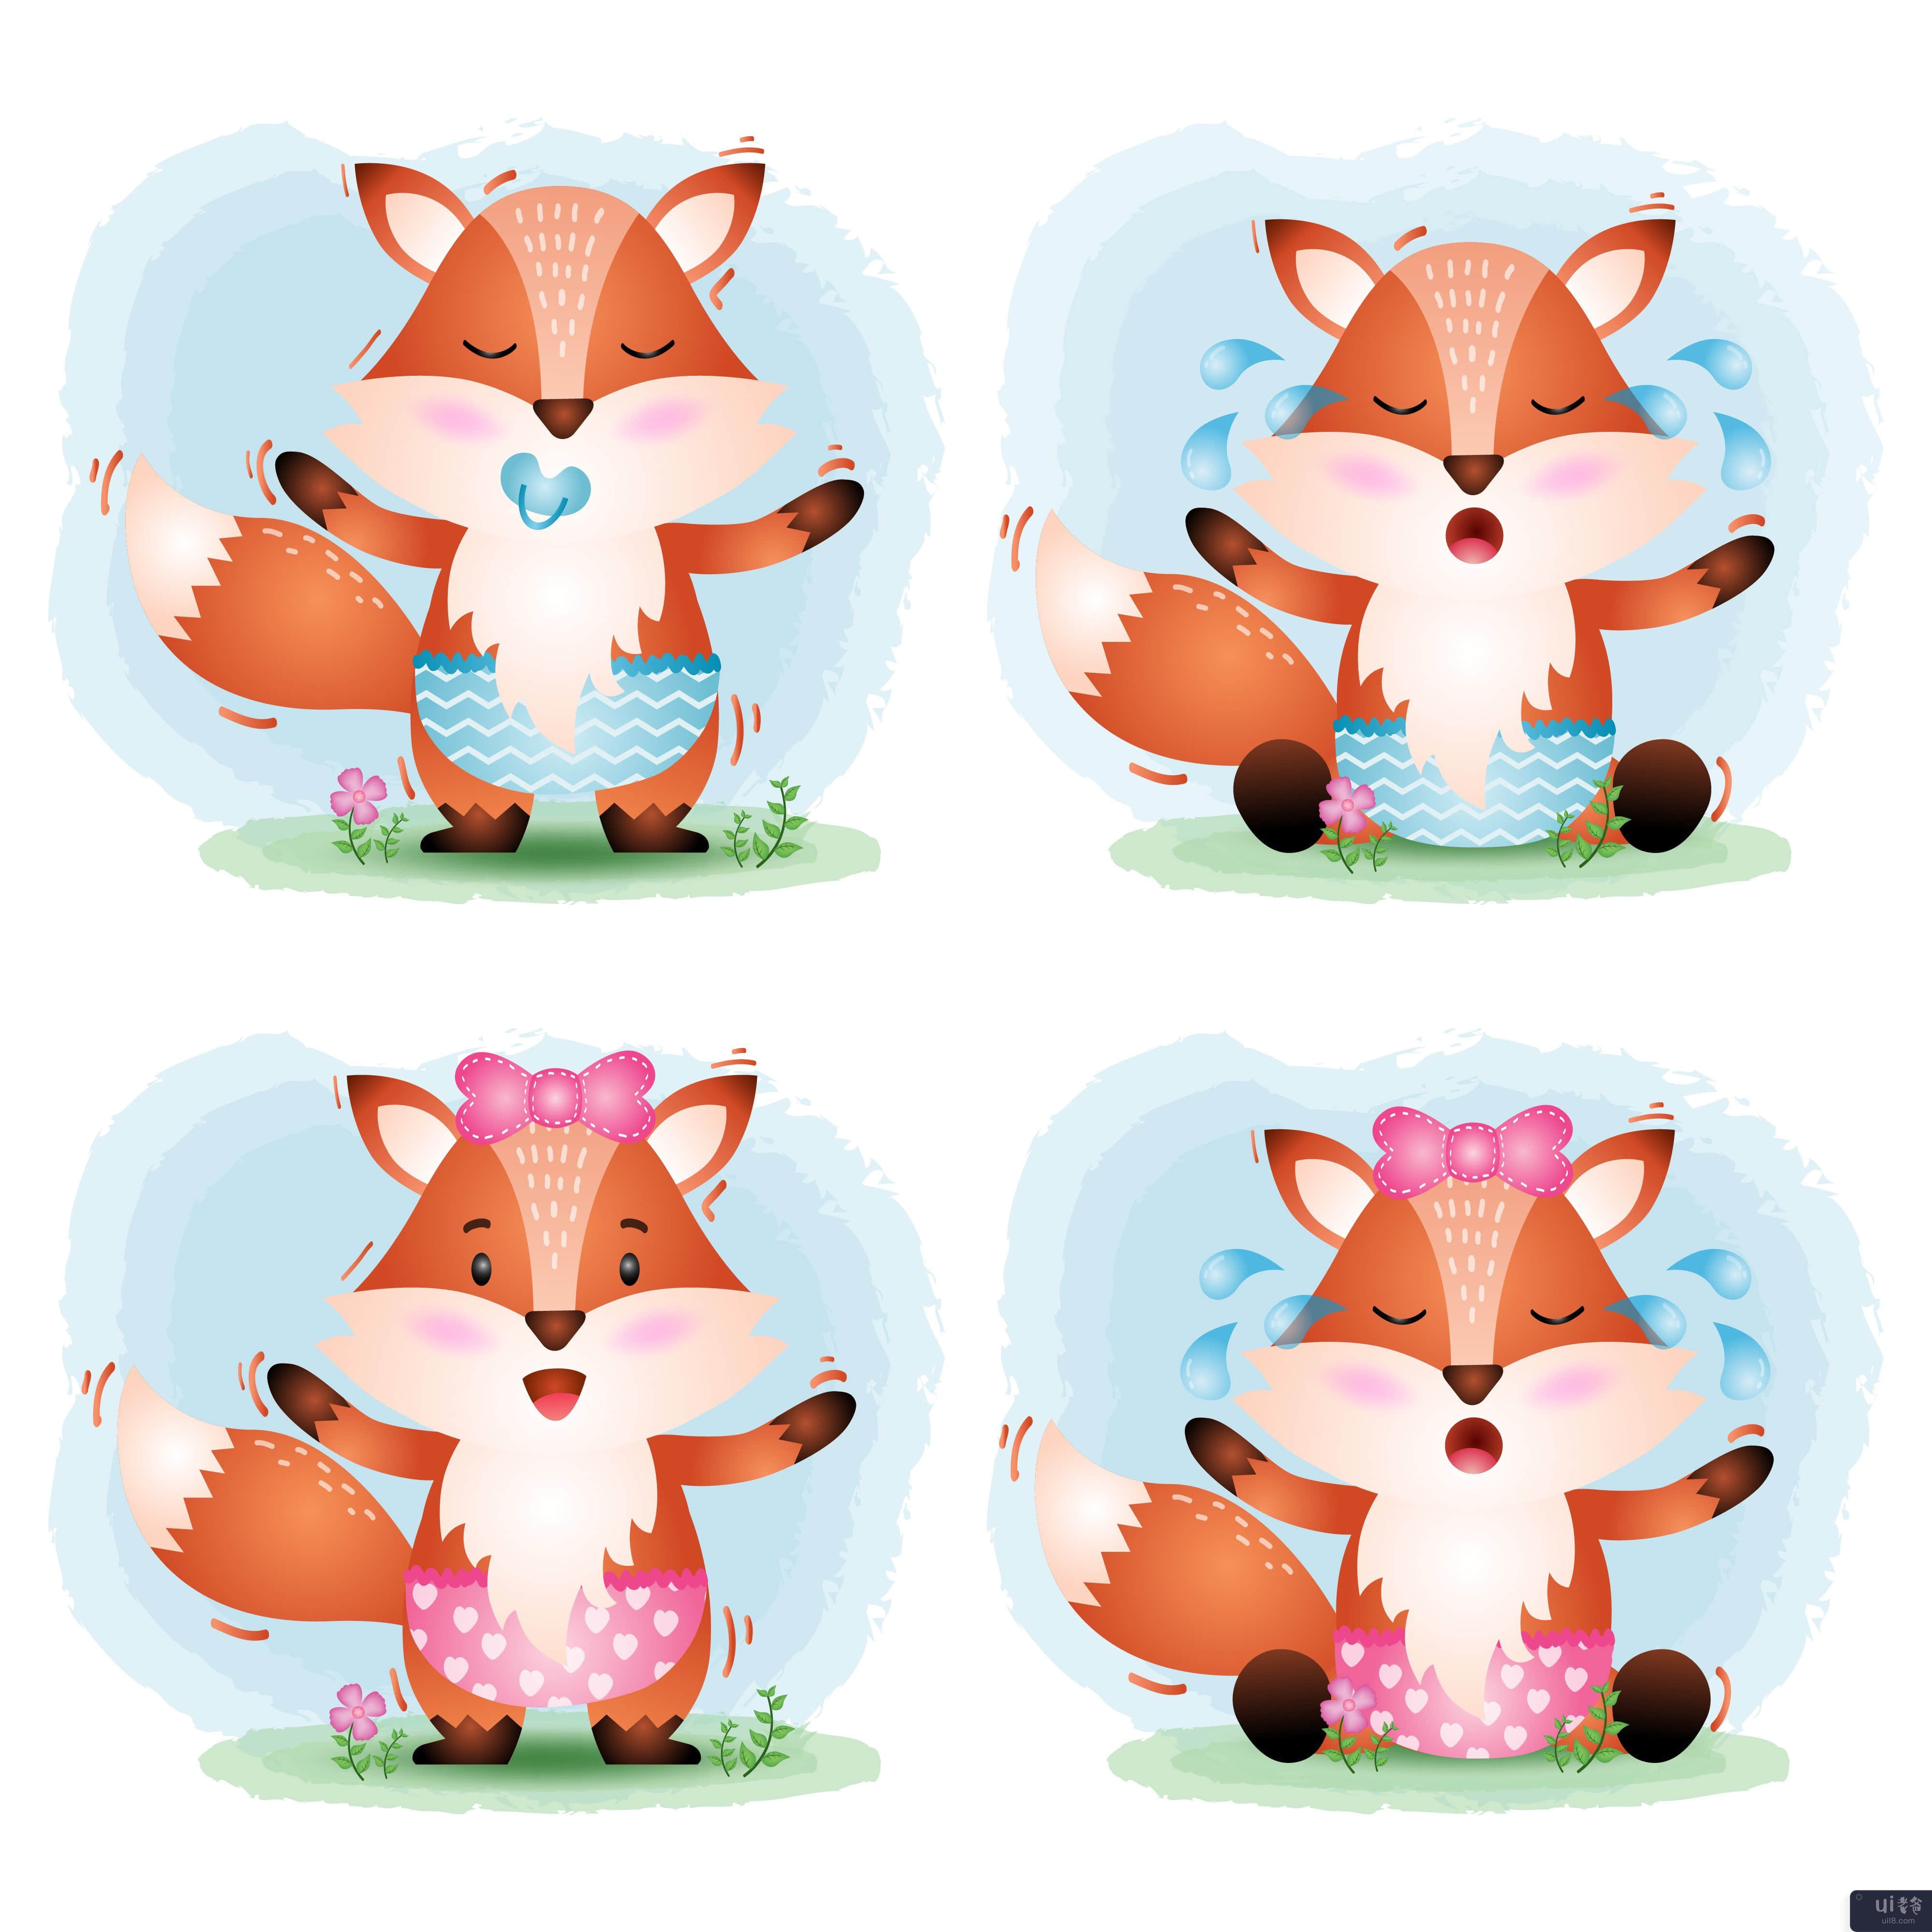 儿童风格的可爱小狐狸系列(cute baby fox collection in the children's style)插图2